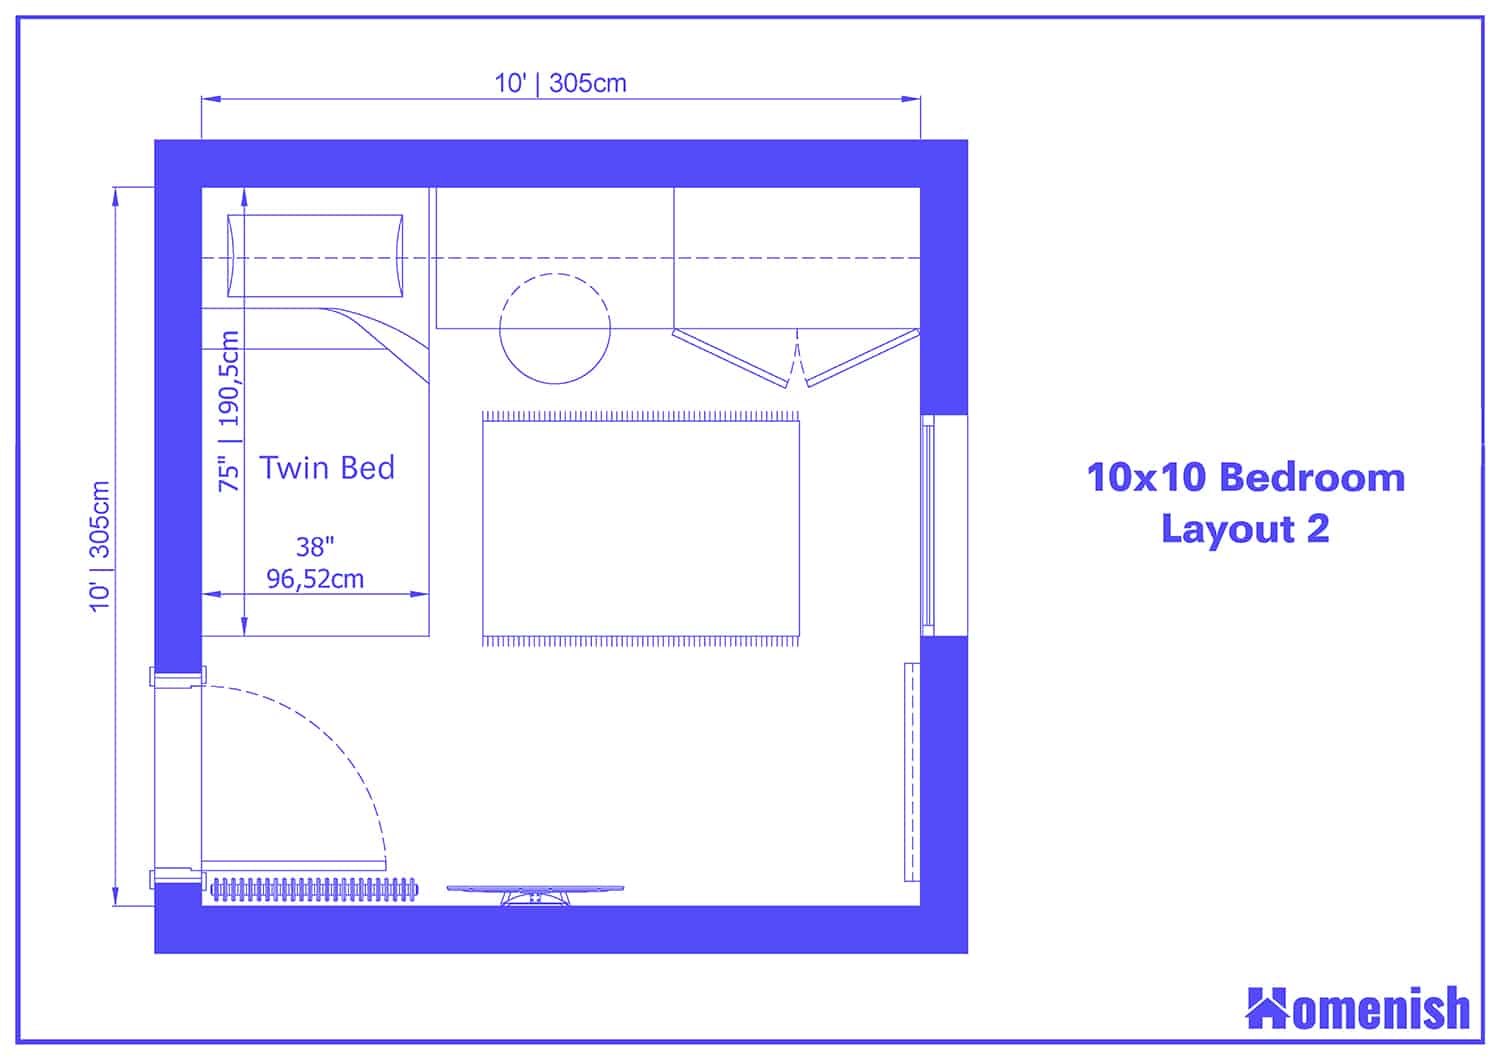 10x10 Bedroom Layout 2